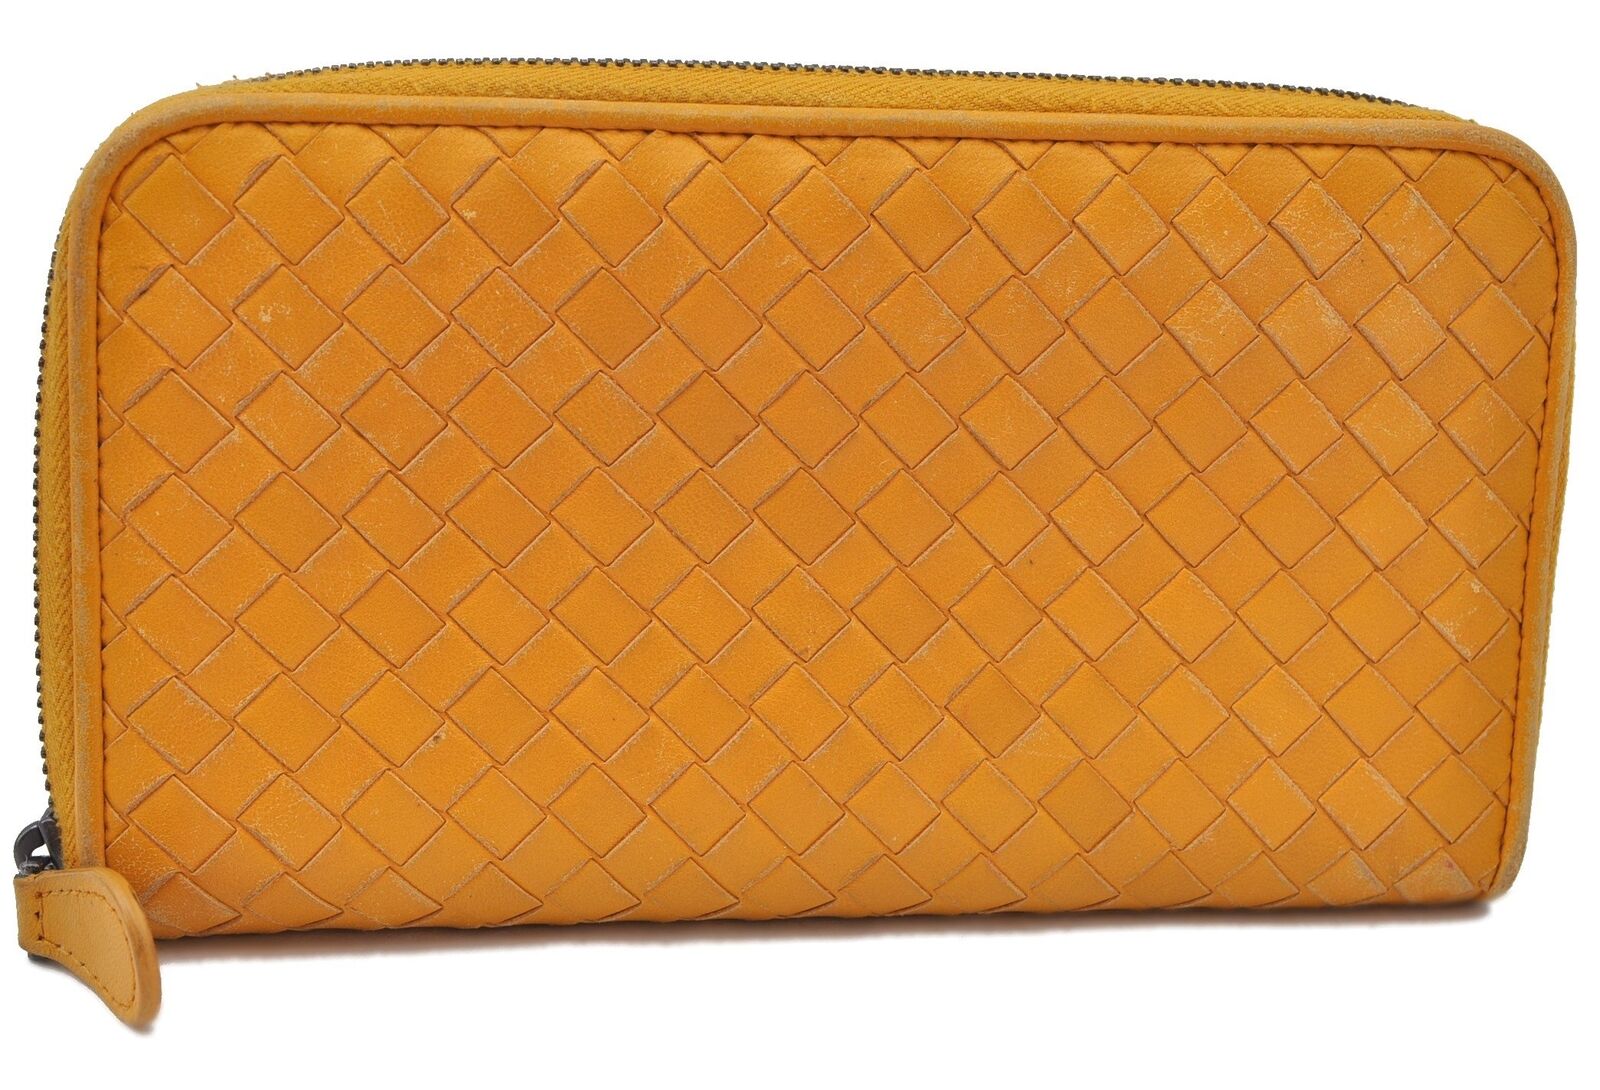 Authentic BOTTEGA VENETA Intrecciato Leather Long Wallet Purse Yellow H4211